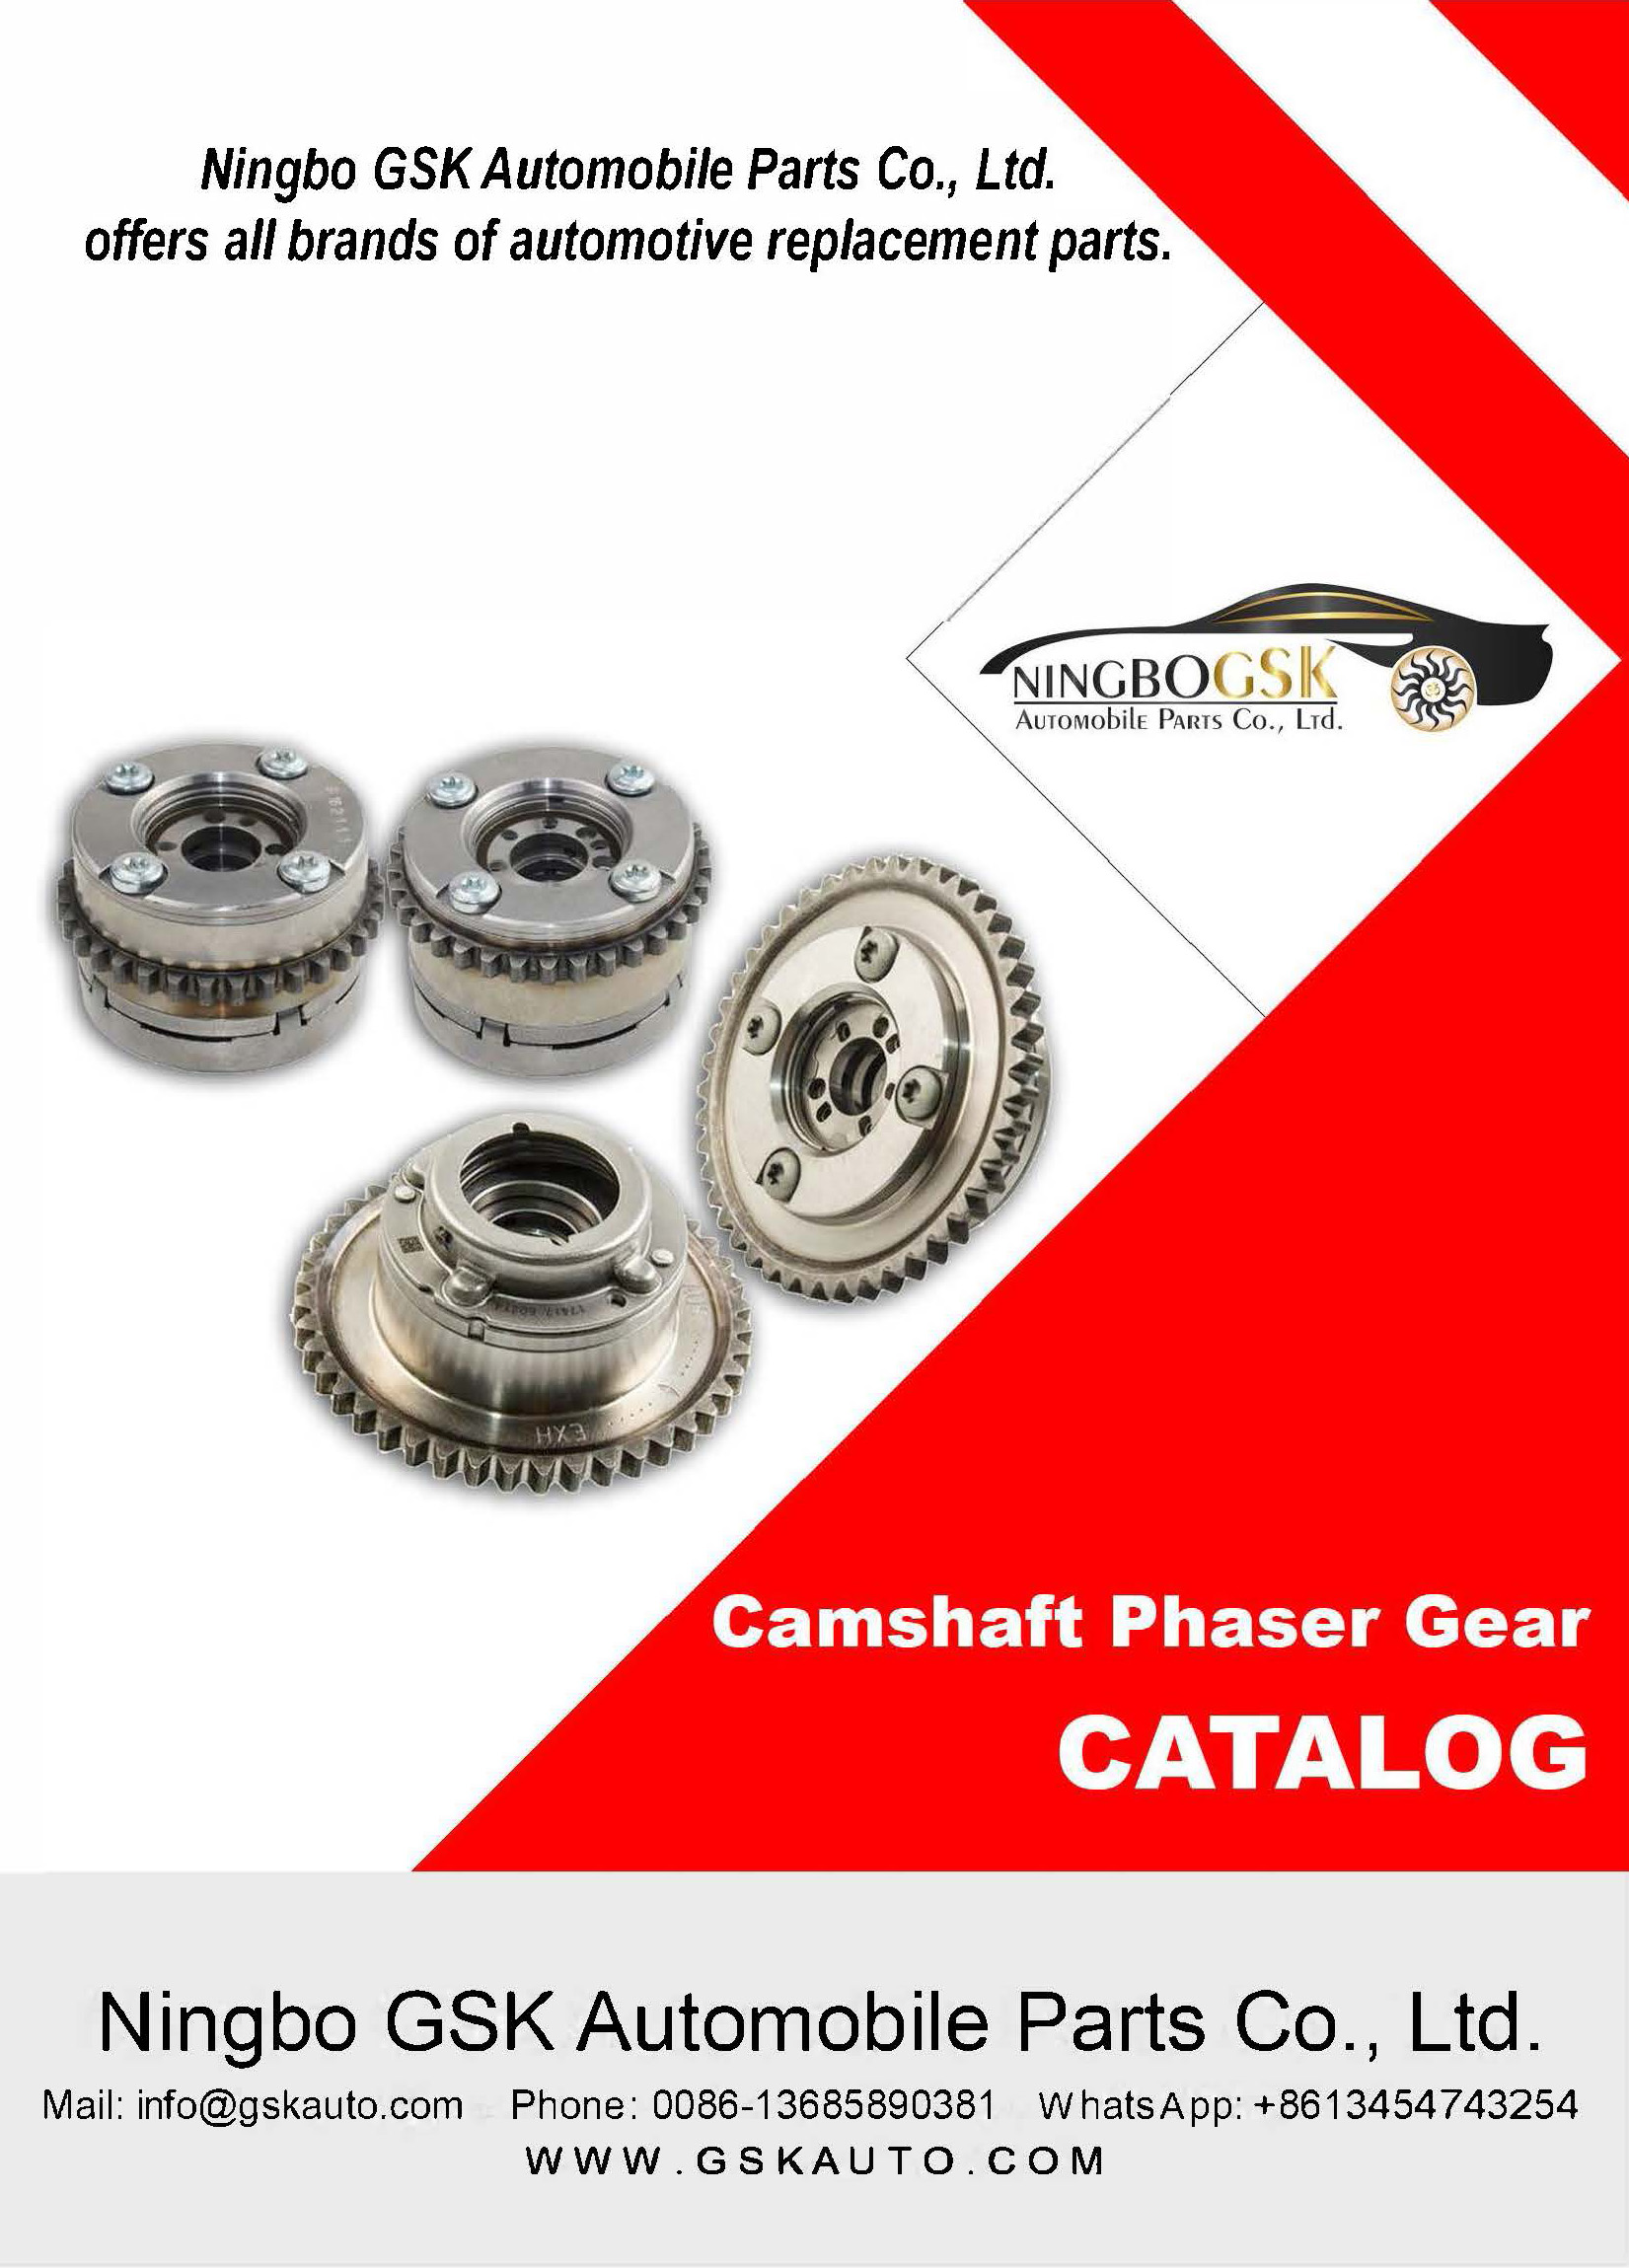 Camshaft Phaser Gear Catalog